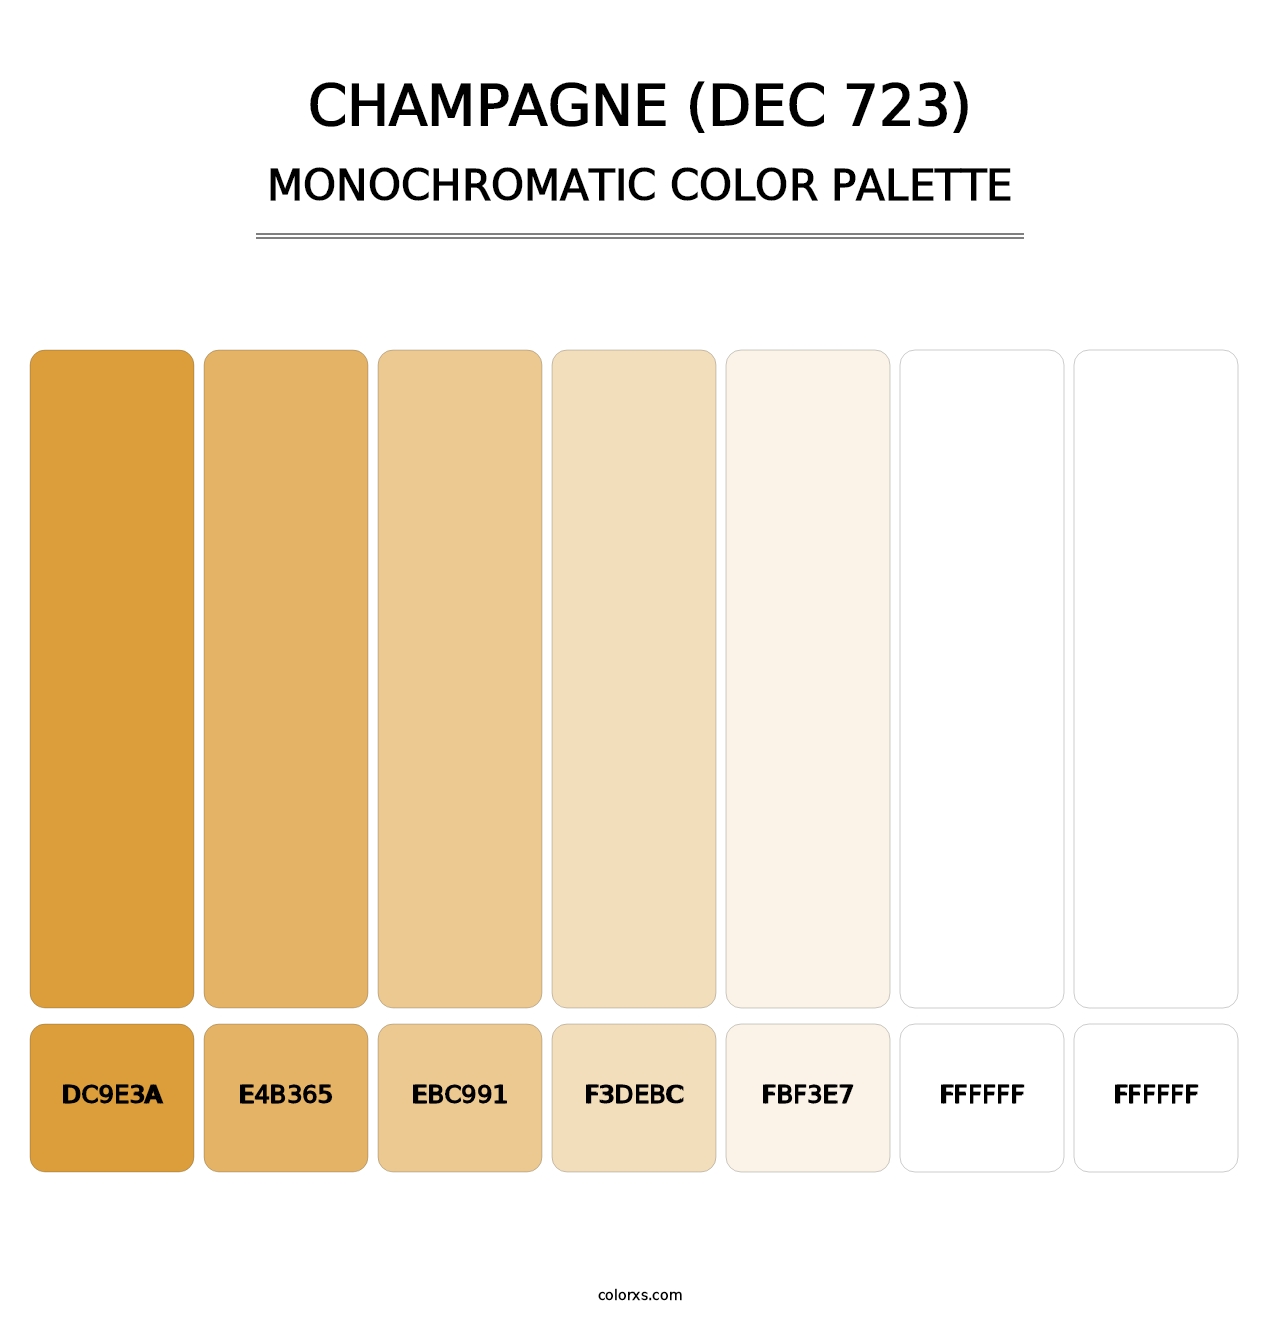 Champagne (DEC 723) - Monochromatic Color Palette